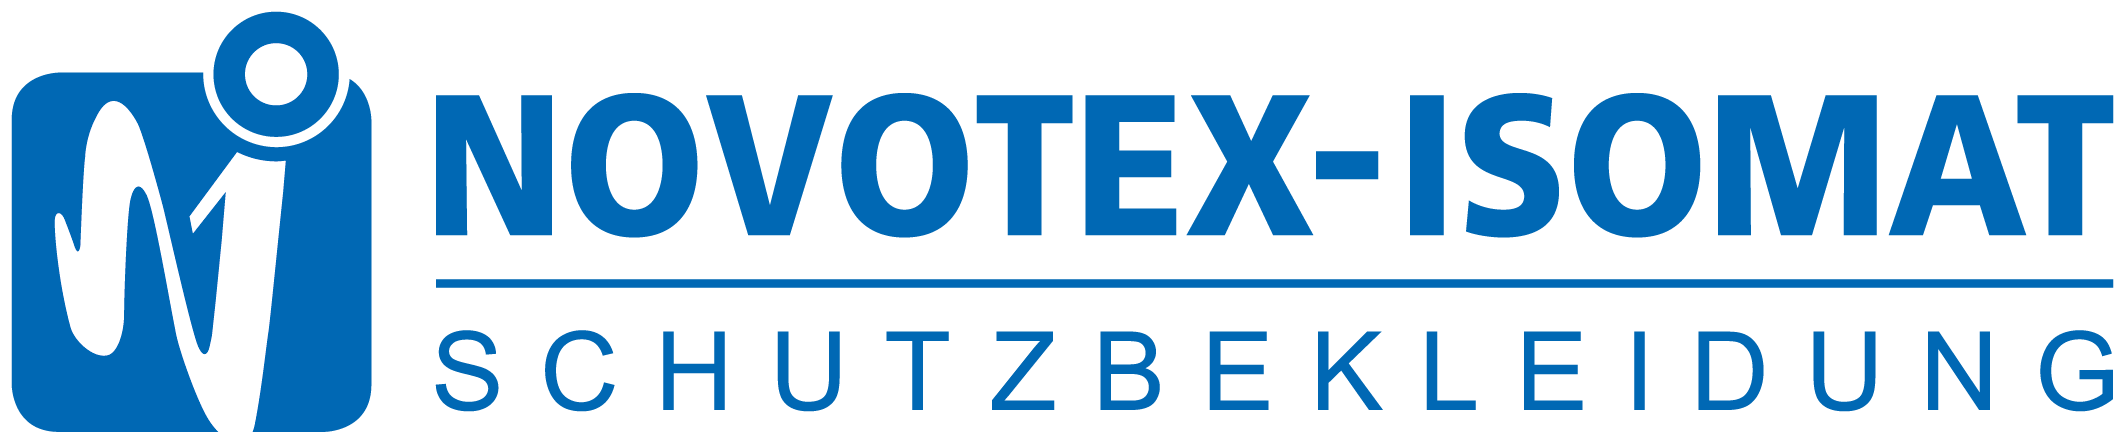 Novotex-Isomat Schutzbekleidung Logo